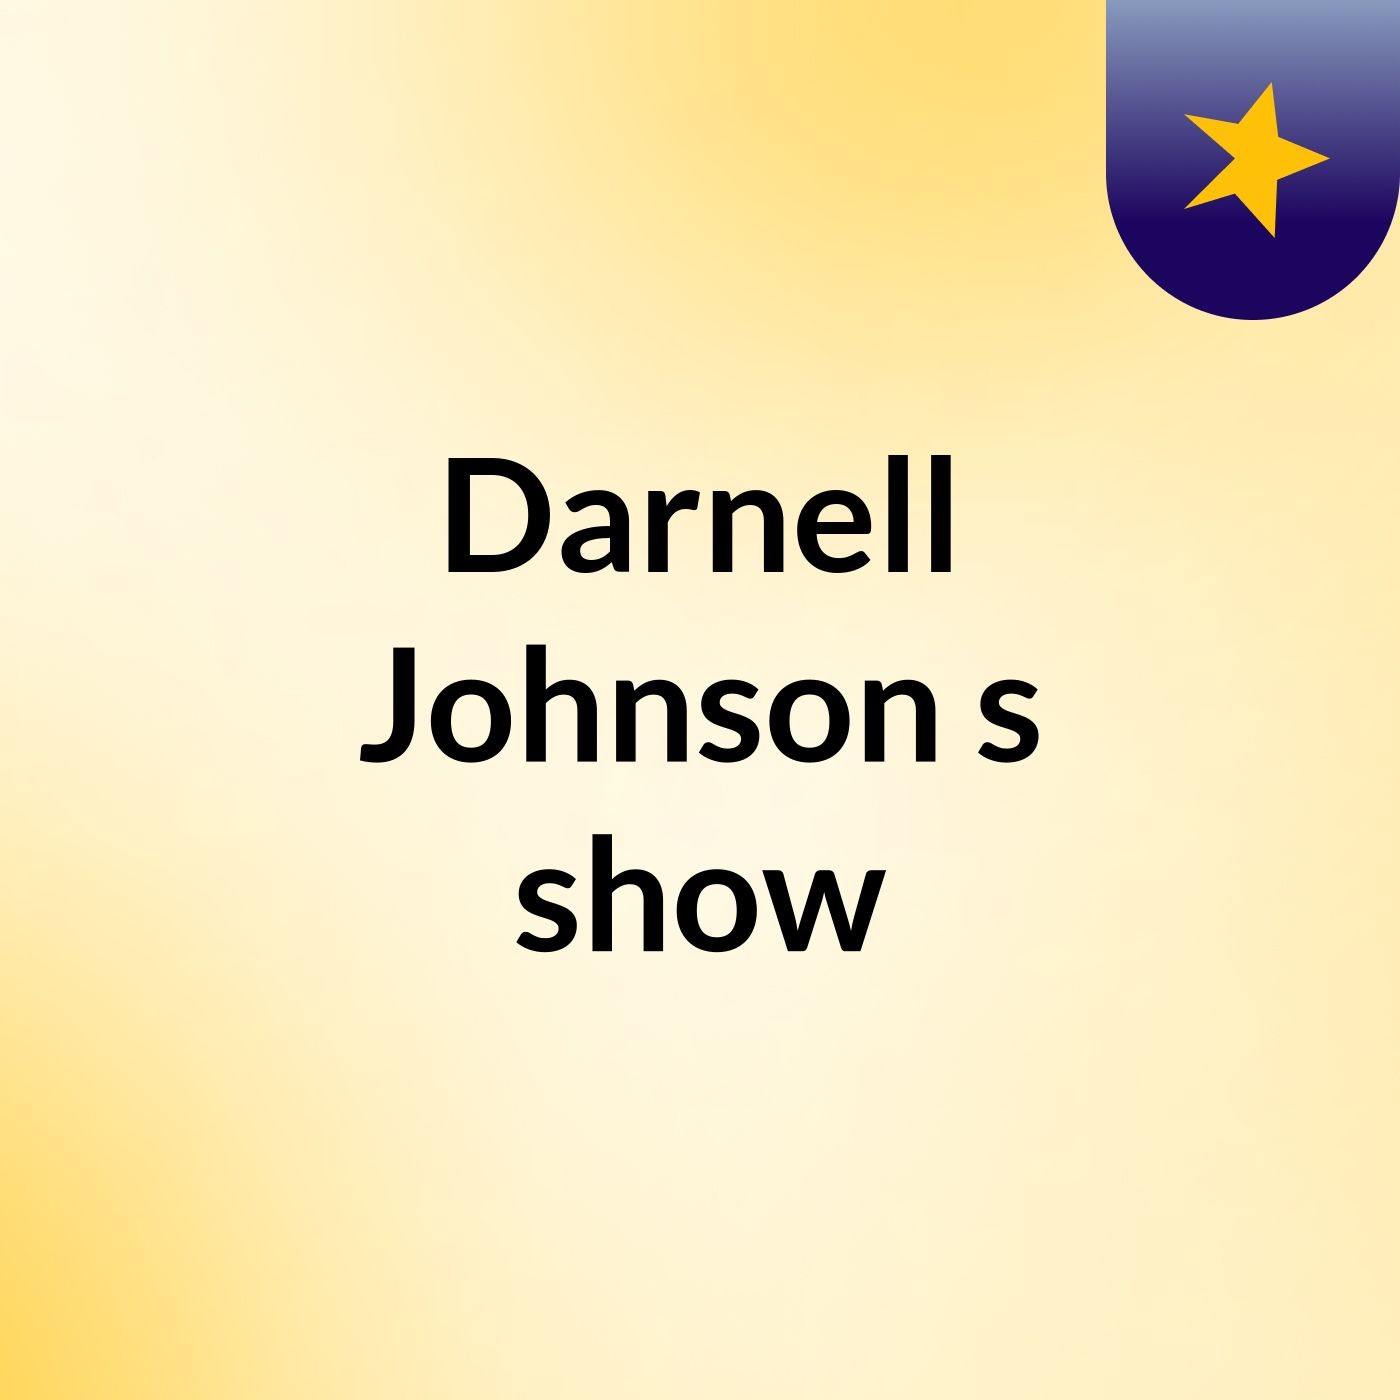 Darnell Johnson's show